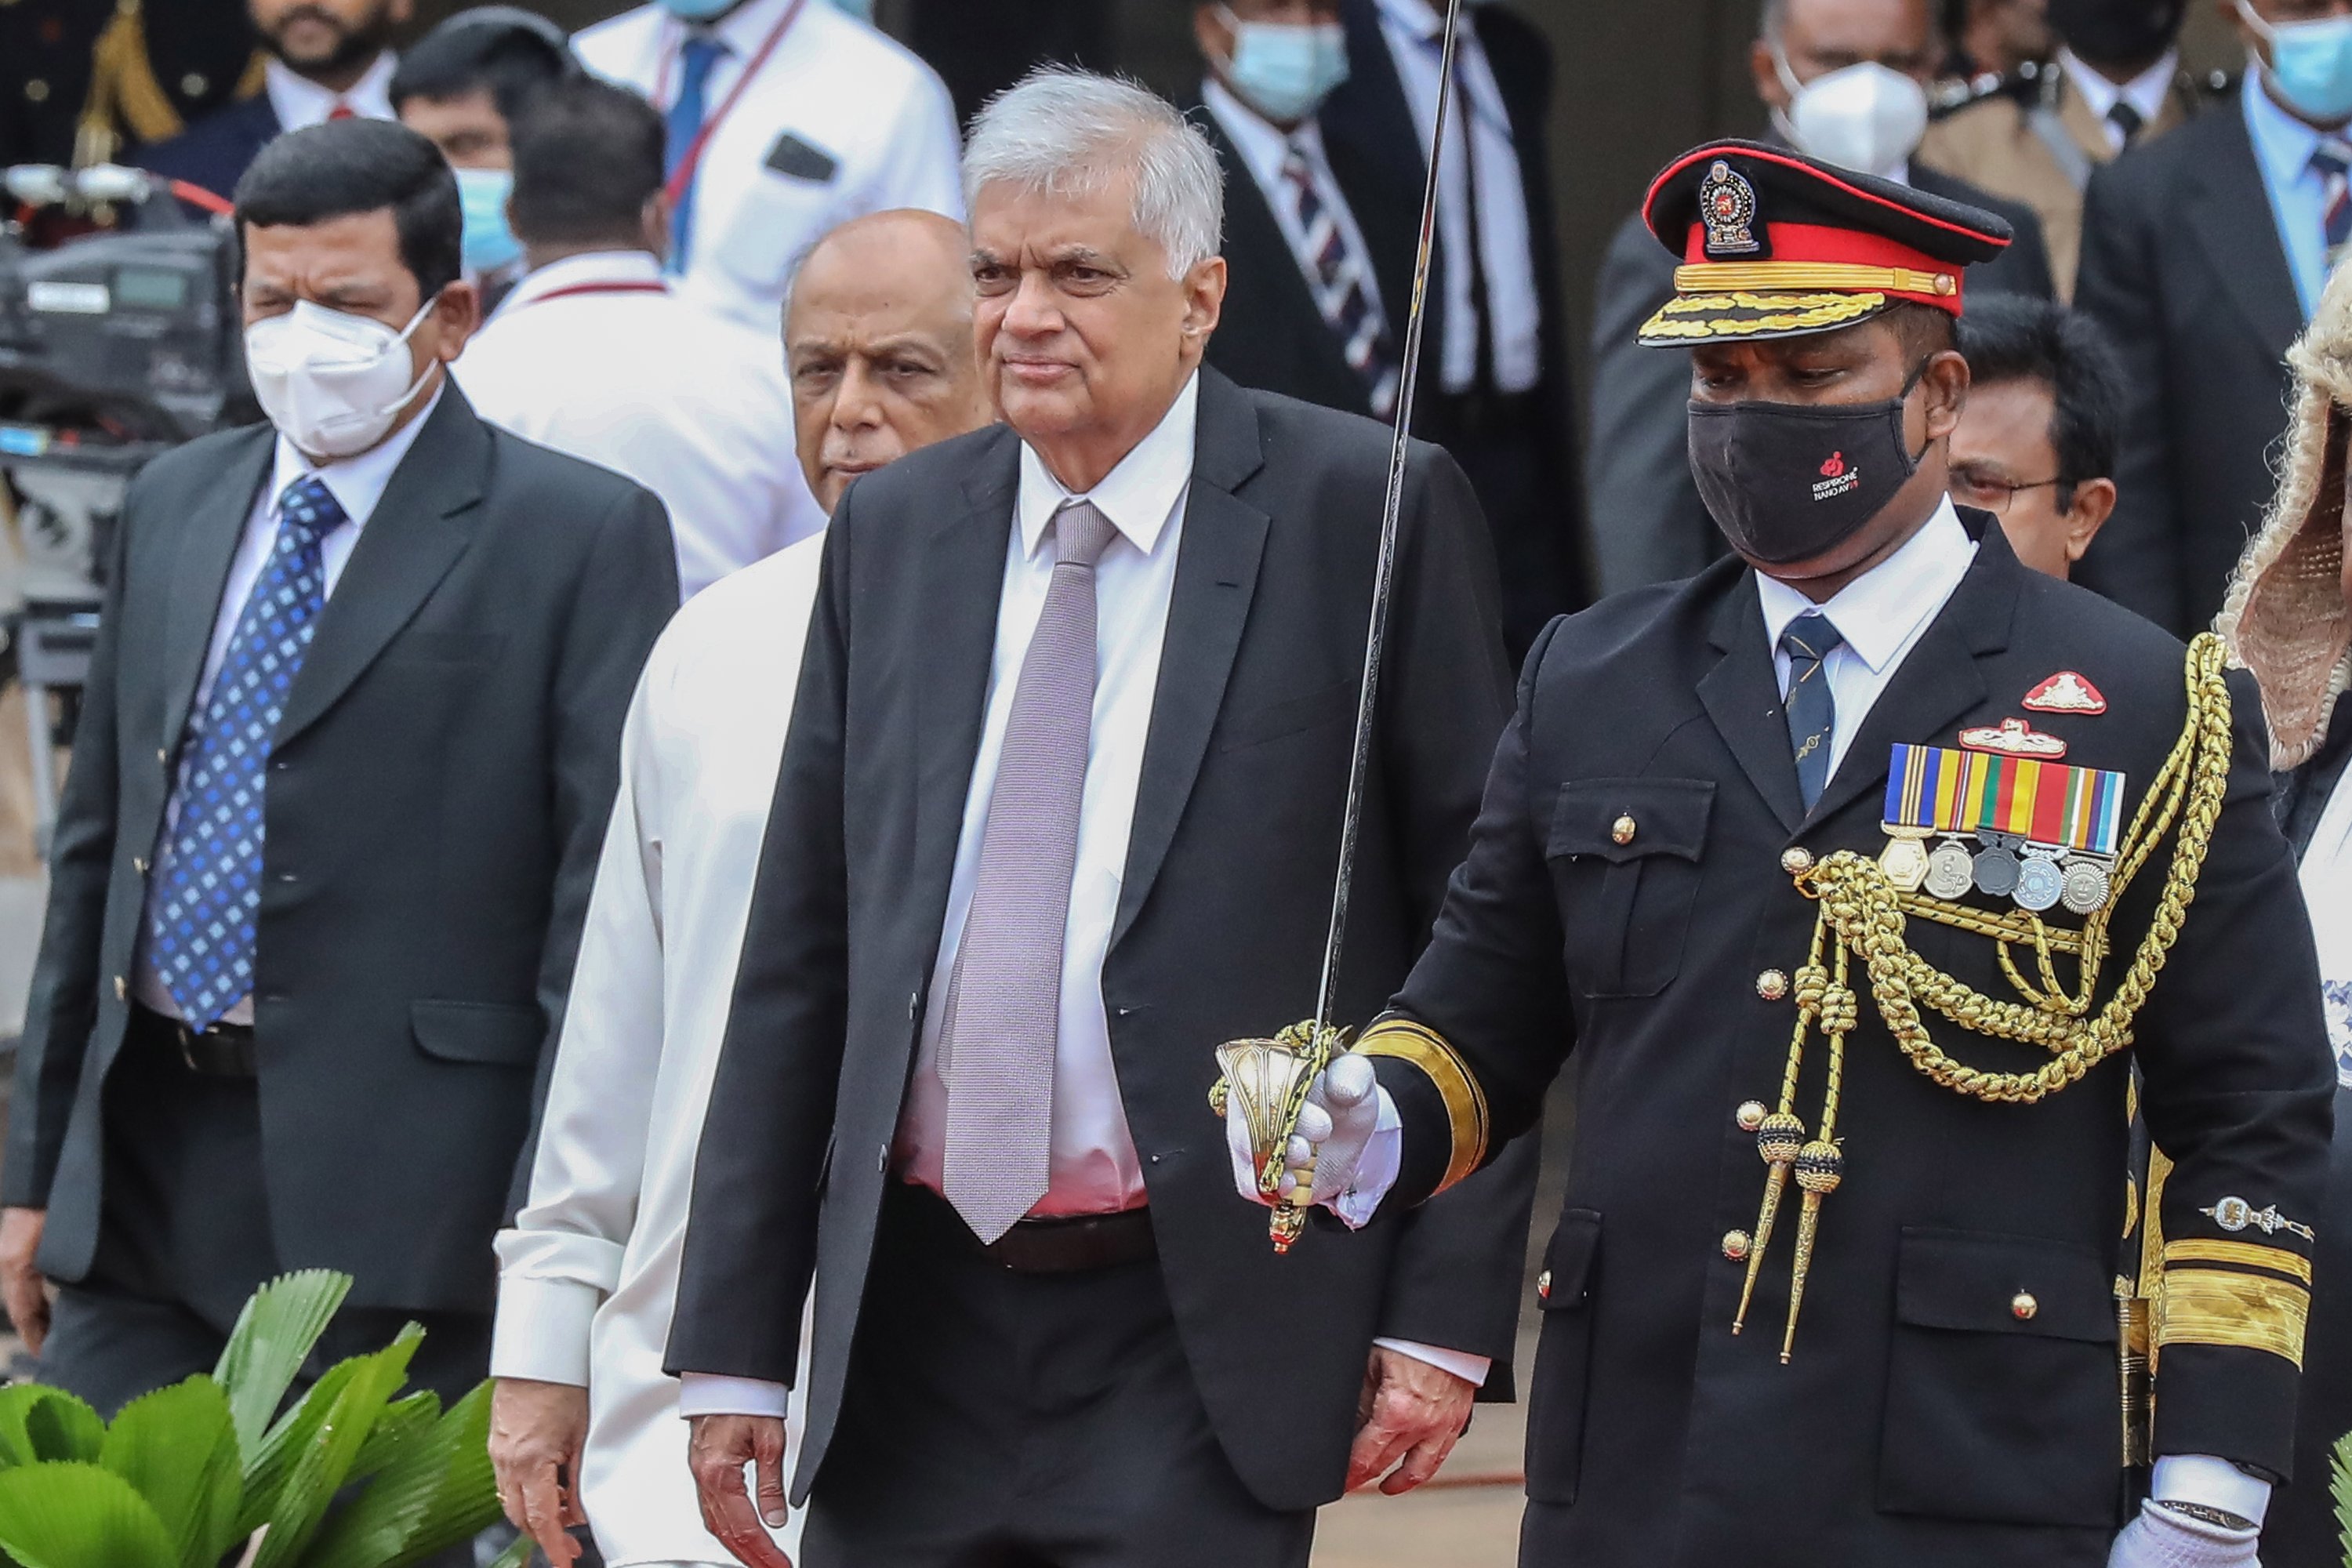 Sri Lanka’s new president proposes 25year plan for crisishit nation